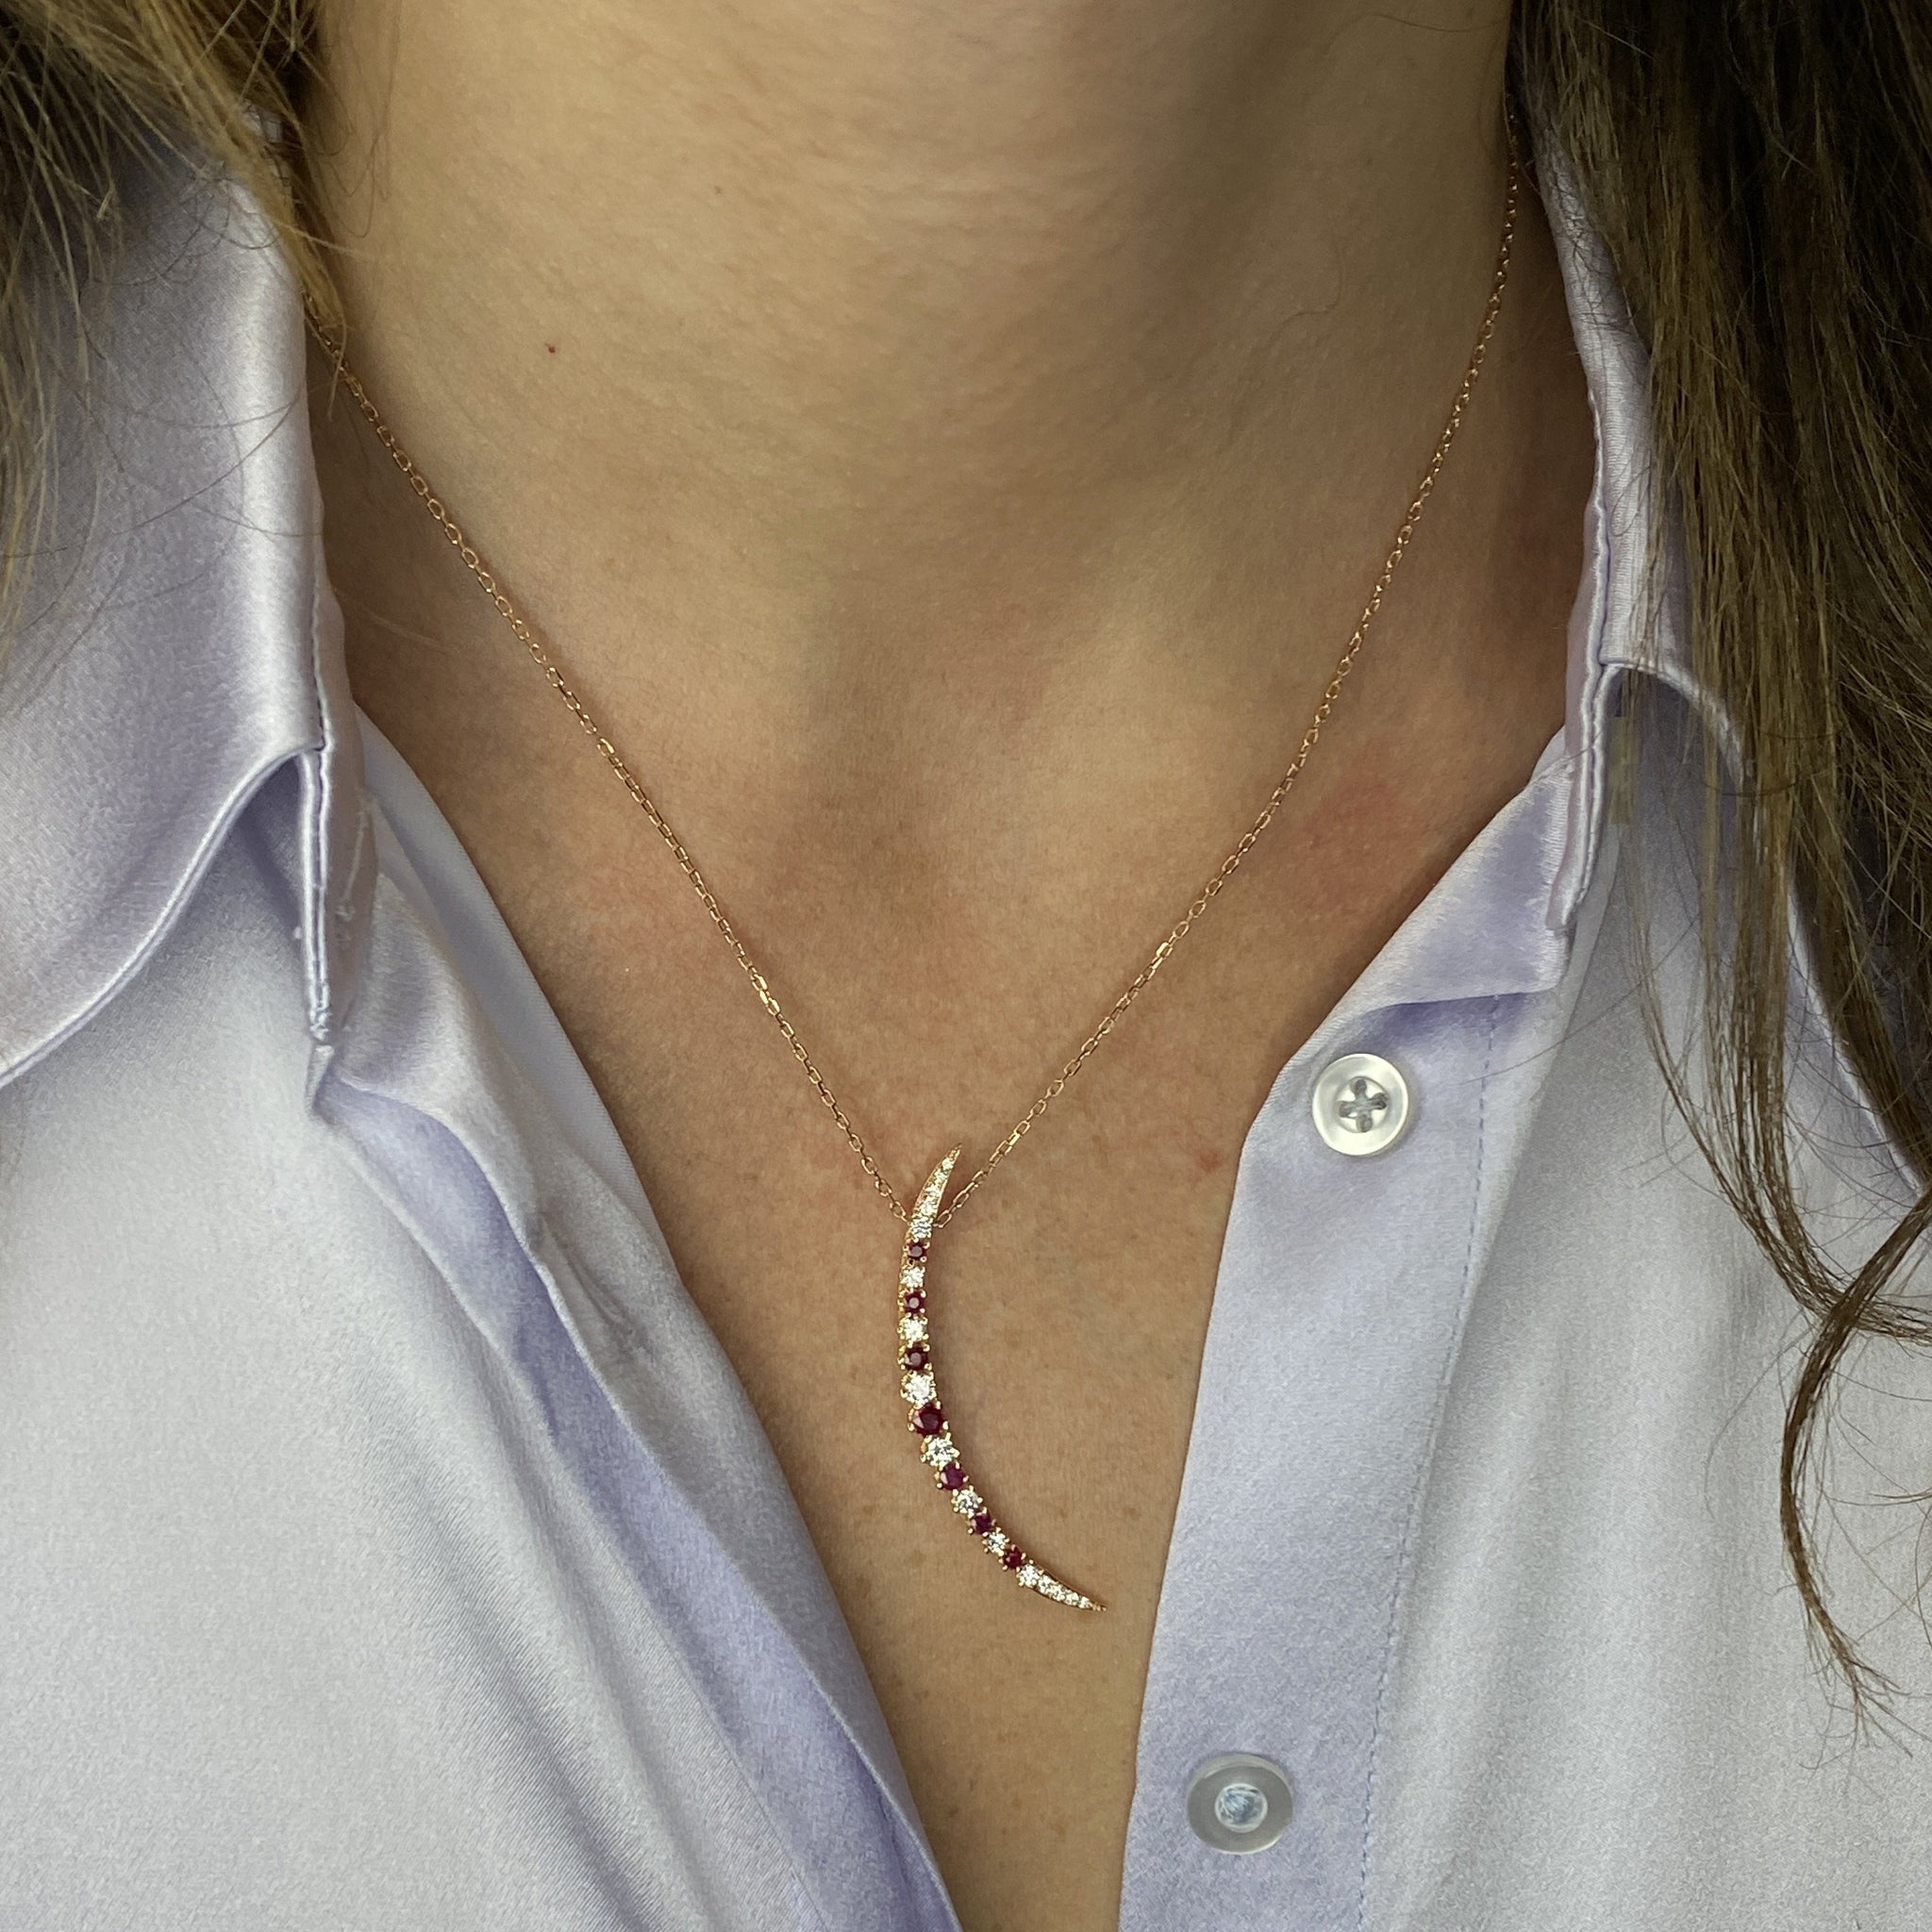 Ruby & Diamonds Crescent Necklace